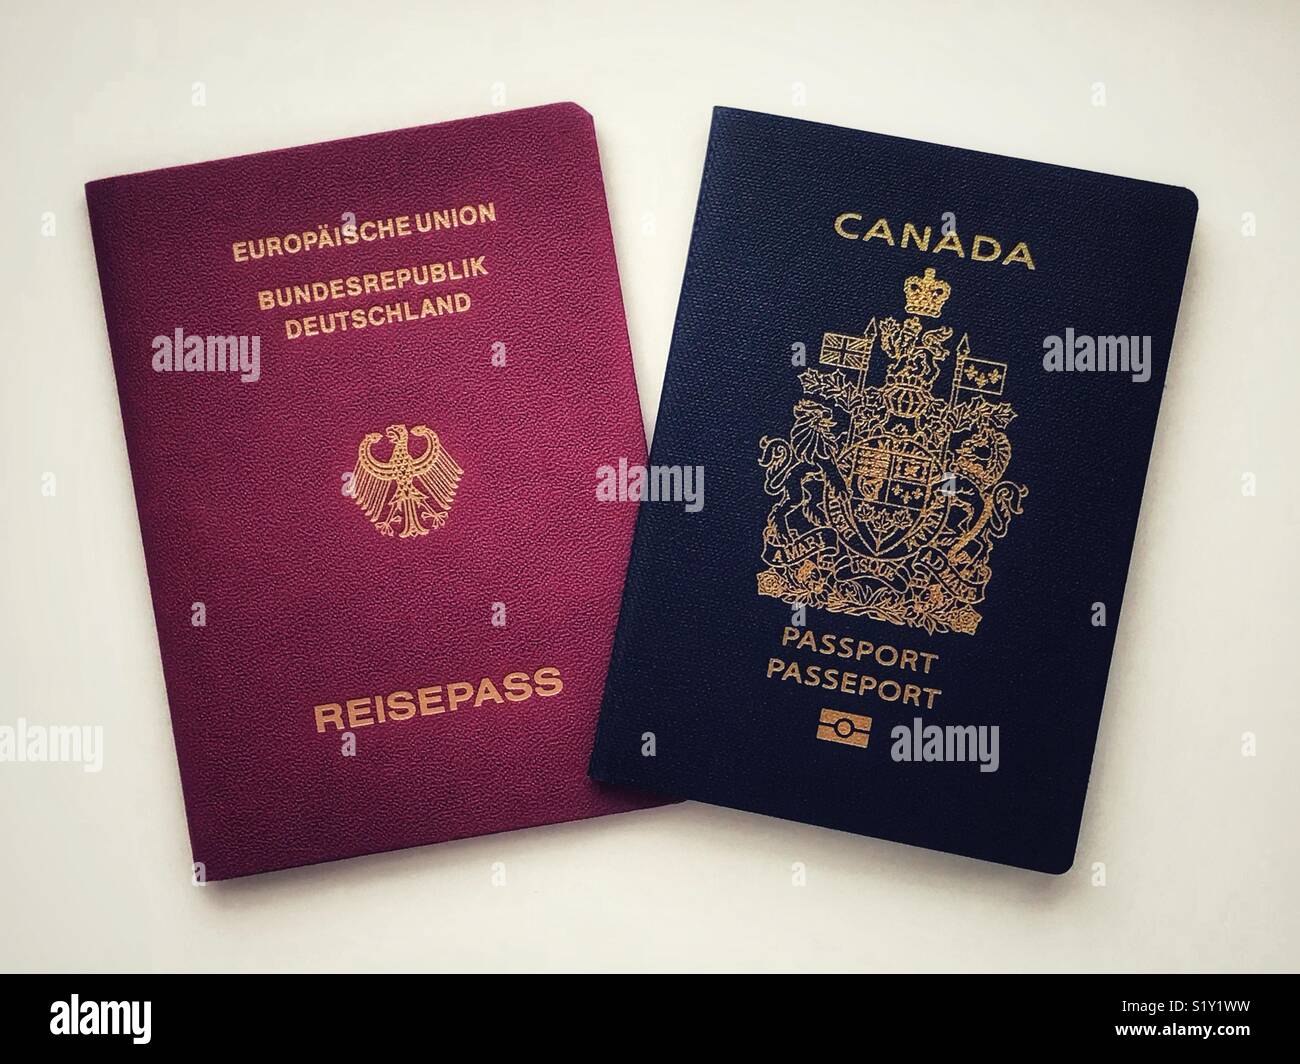 Two passports: European Union and Canada. Stock Photo